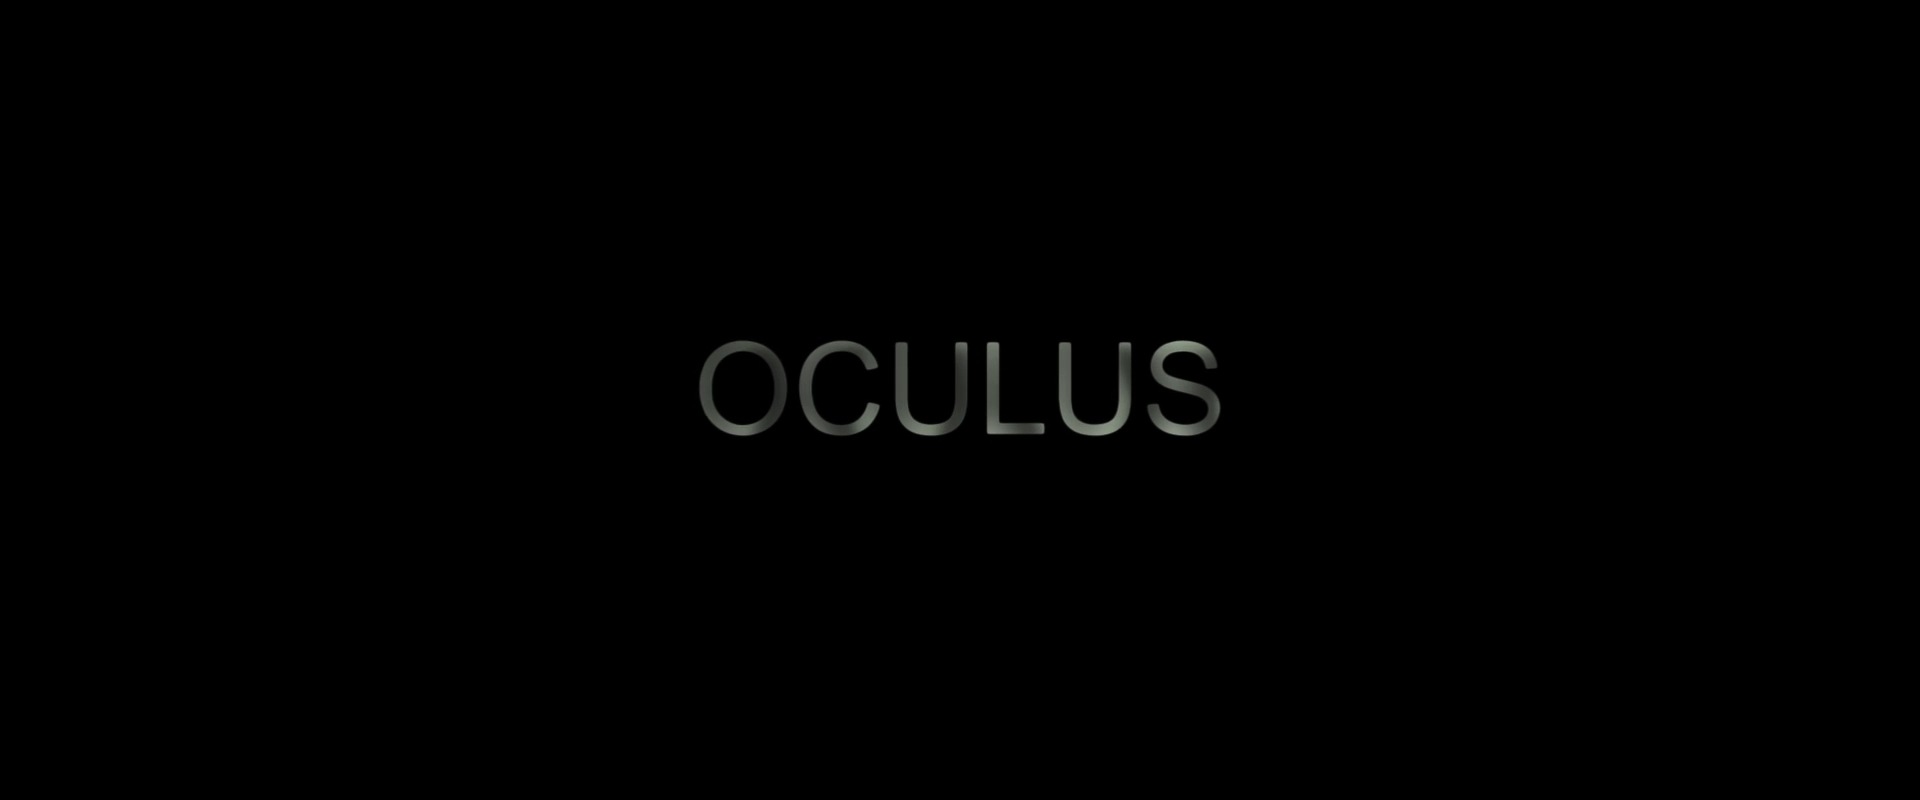 Oculus_ScreenCaptures_0001.jpg